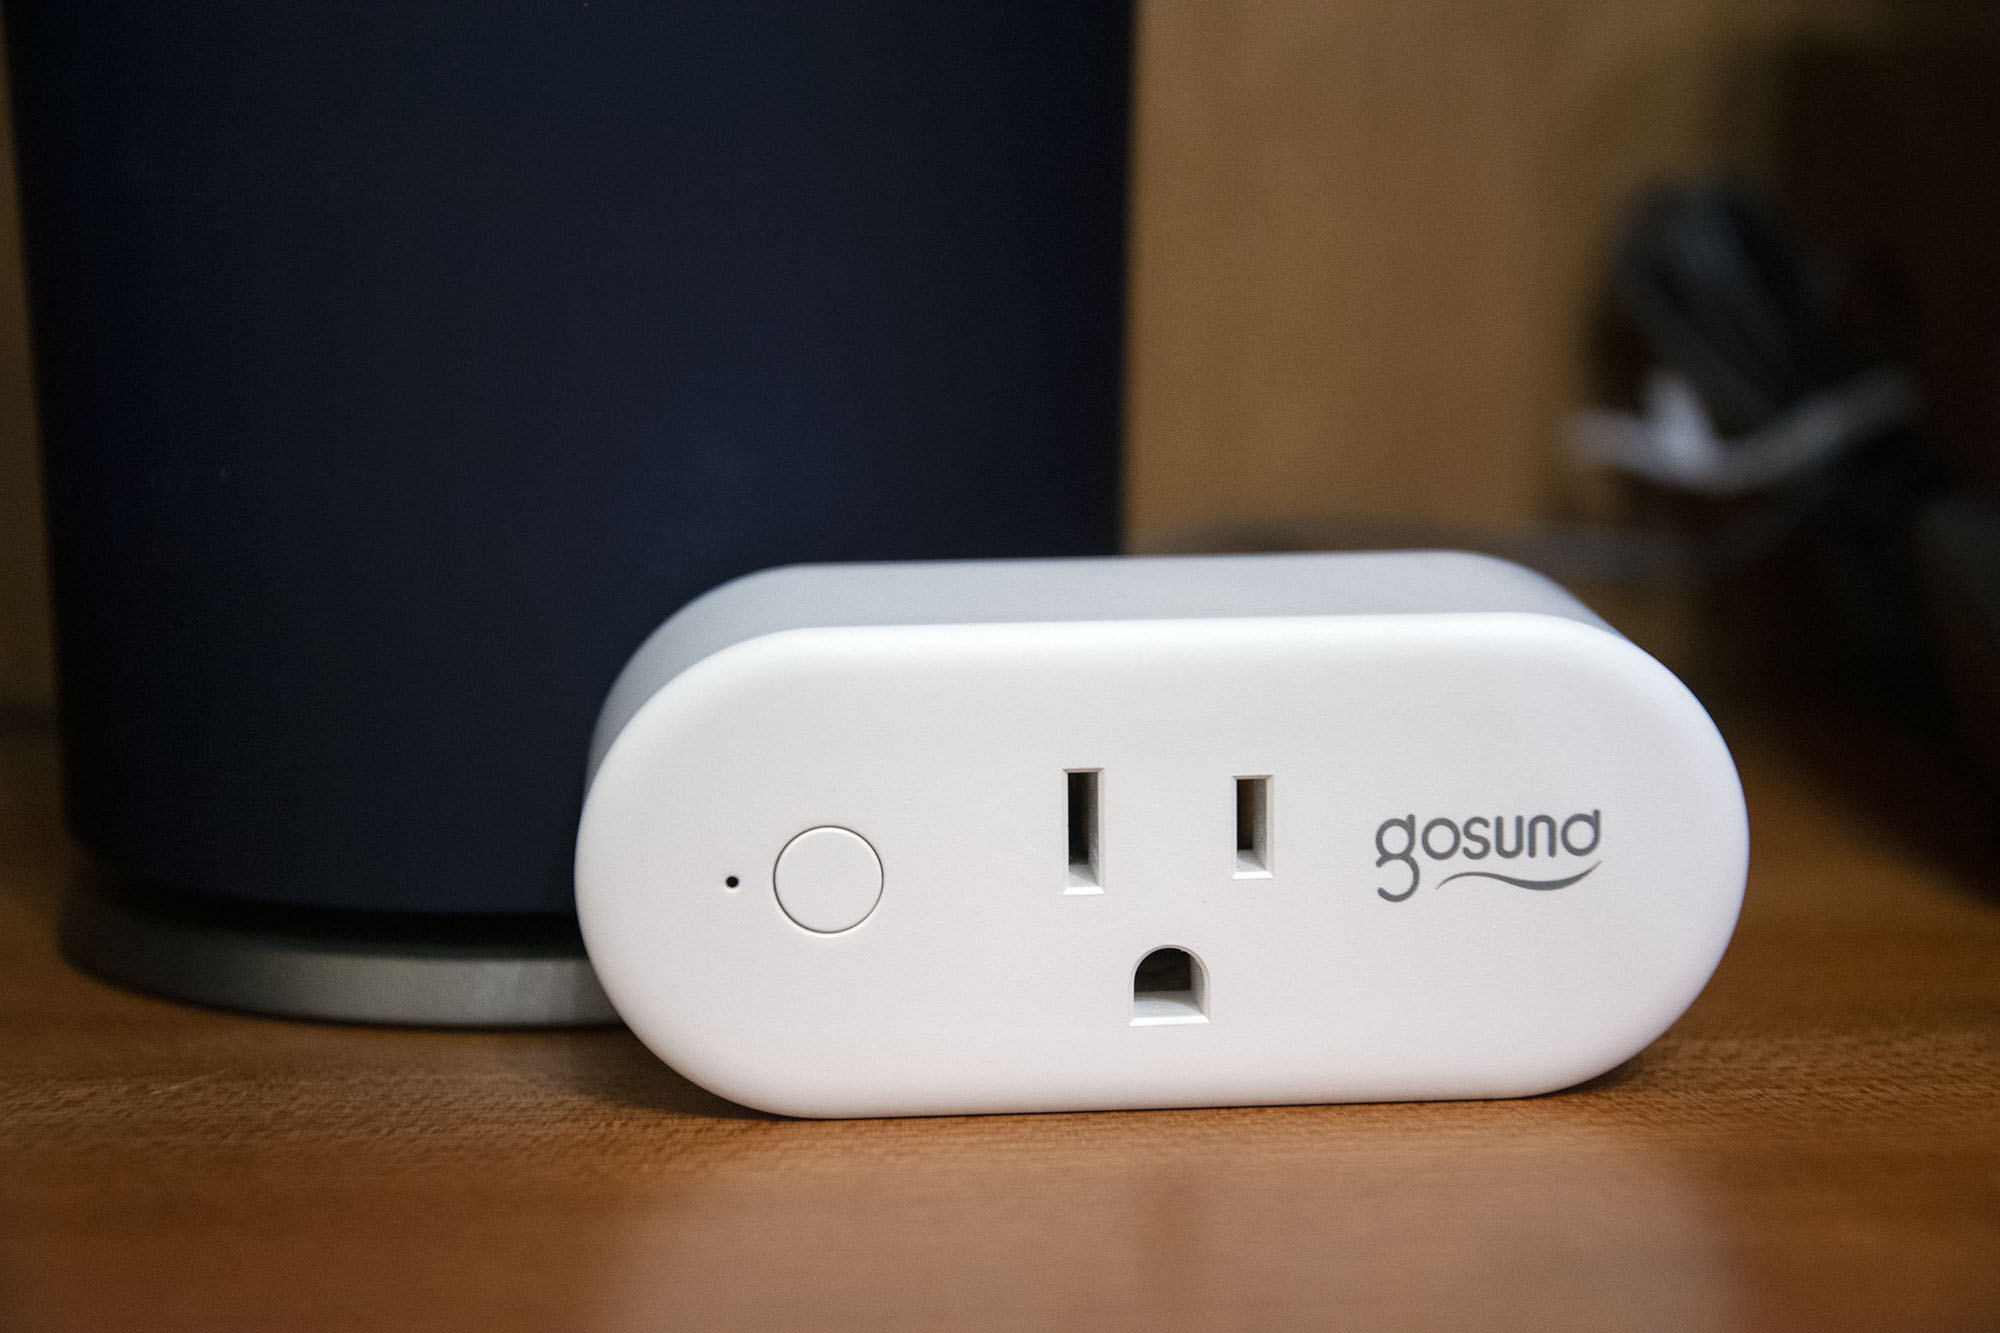 Gosund Smart Plug, WiFi Smart Socket Work with Alexa Google Home